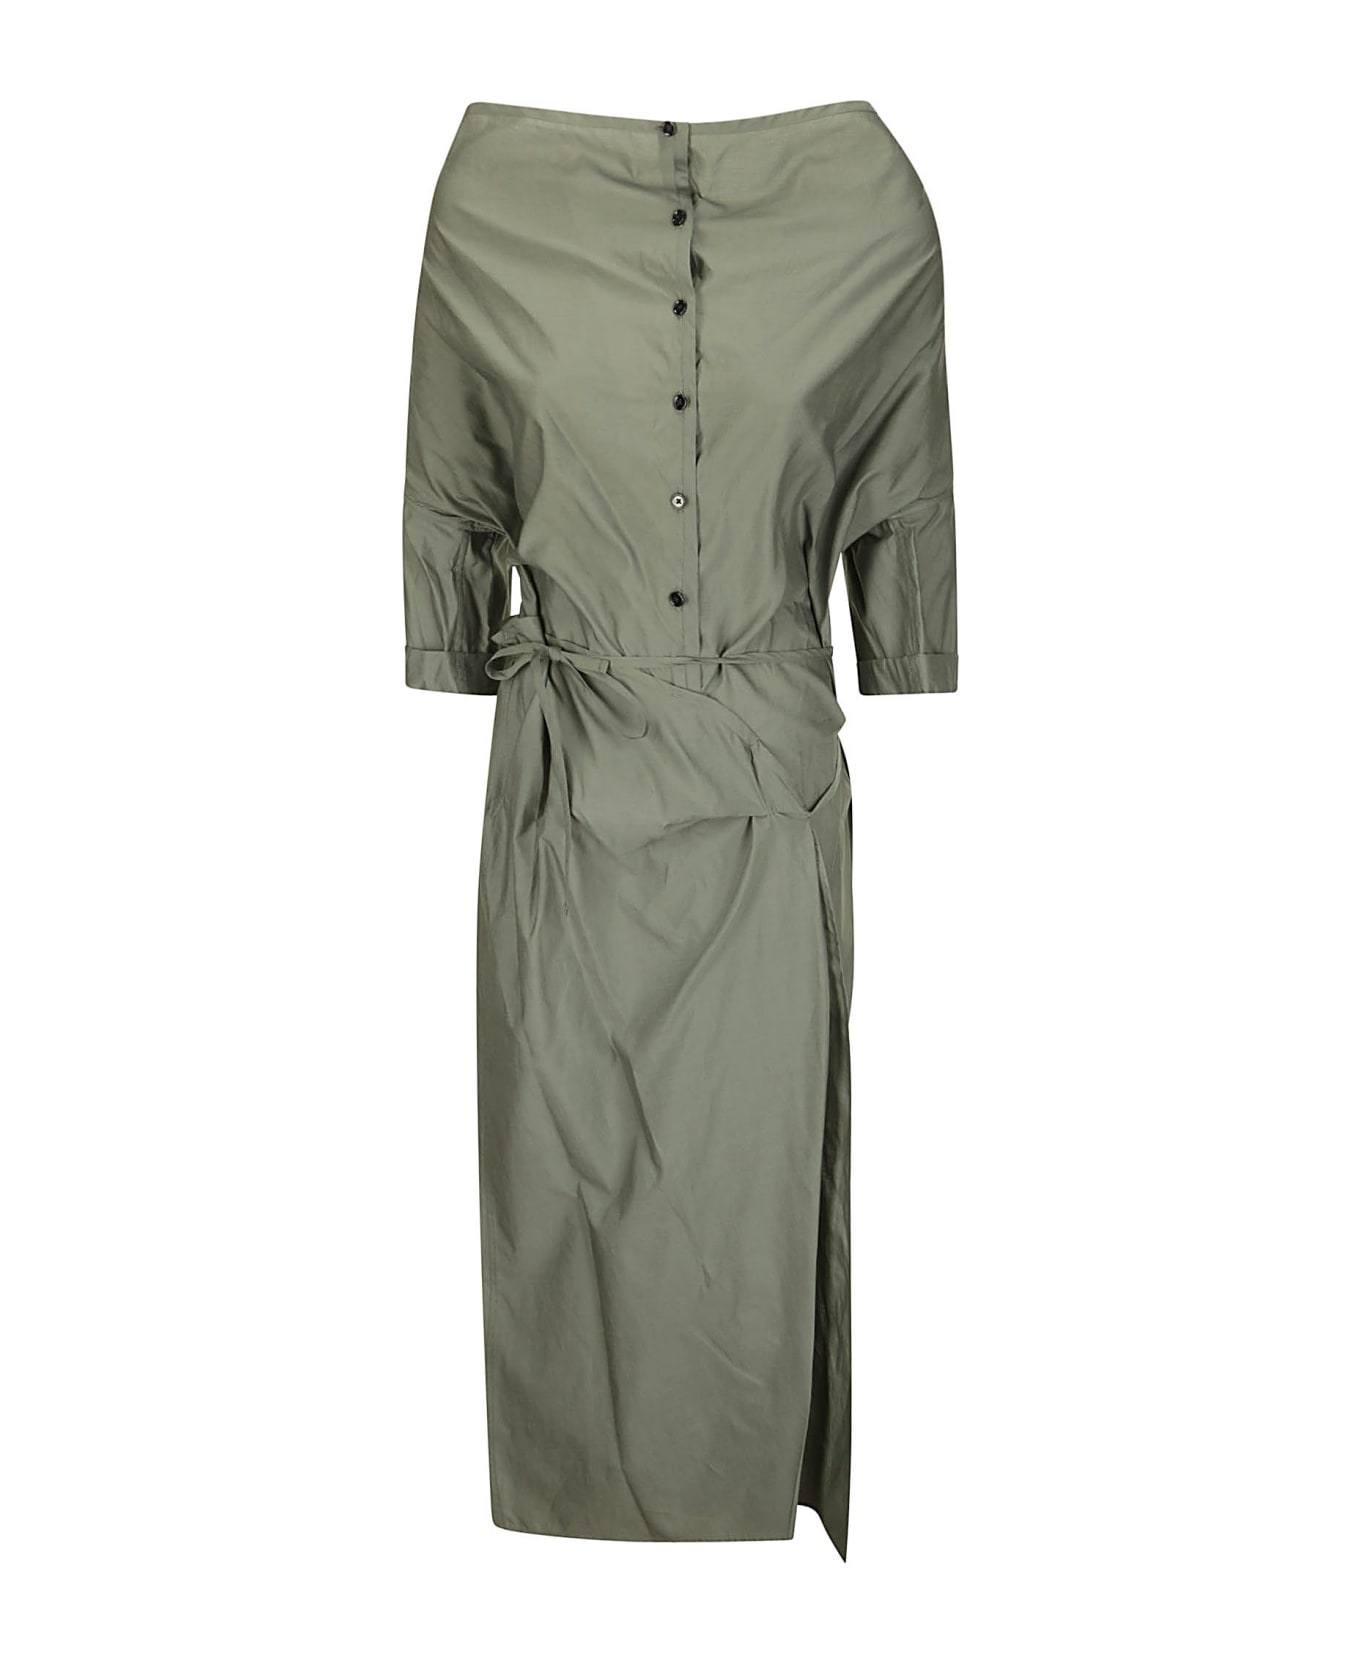 Lemaire Short Sleeve Wrap Dress - ASPHALT